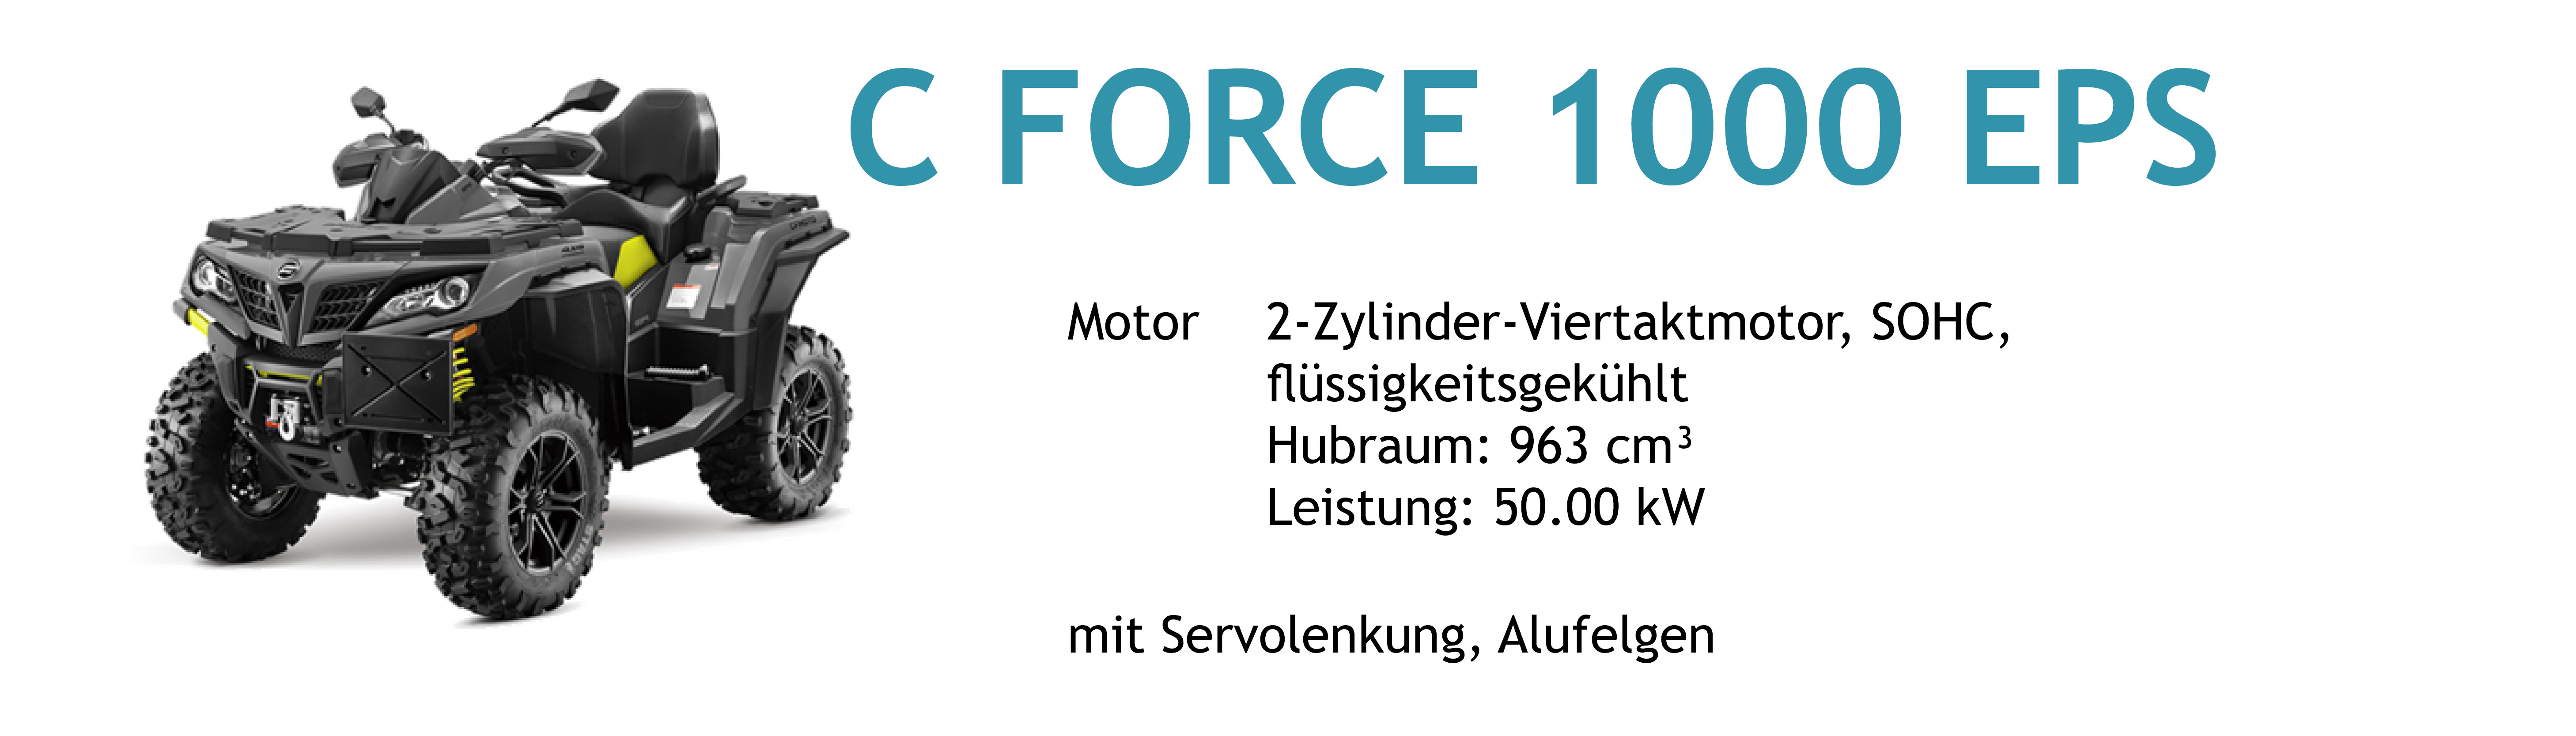 Cforce 1000 EPS